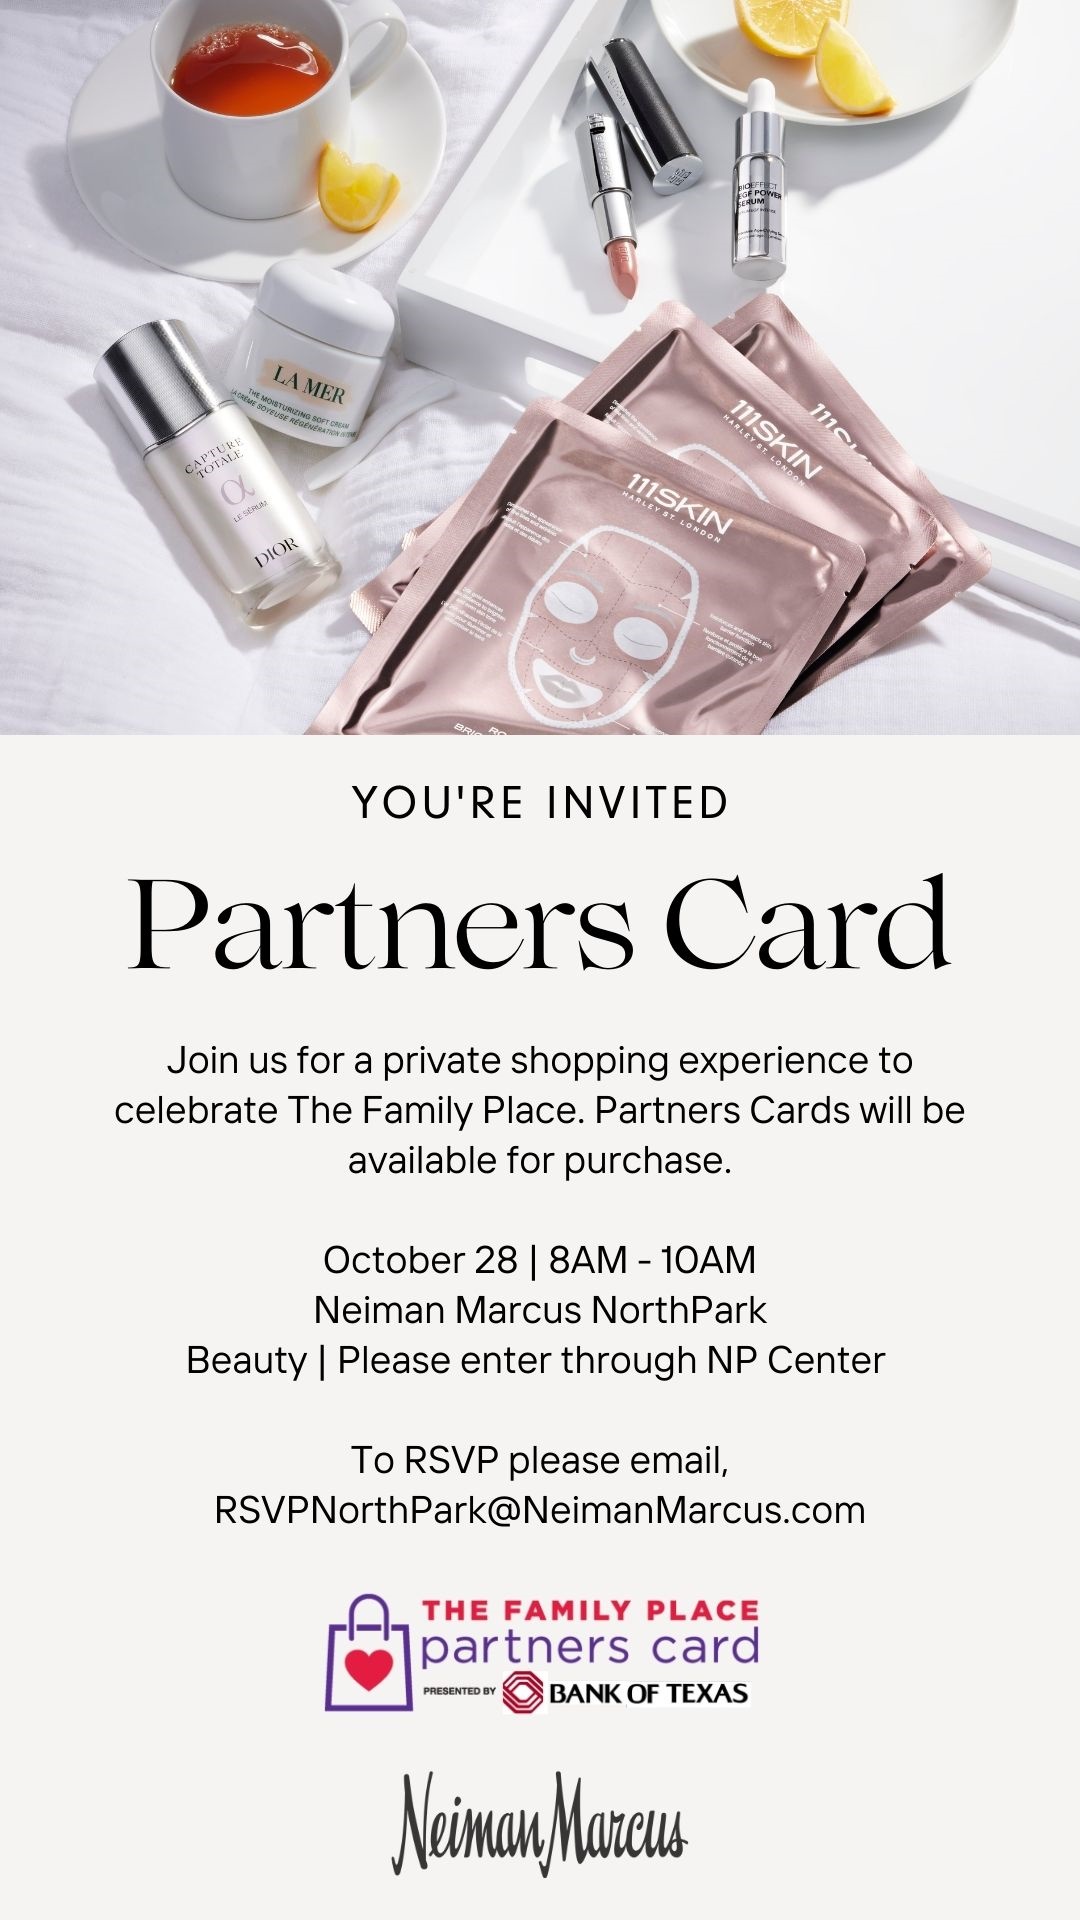 Partner Card Event